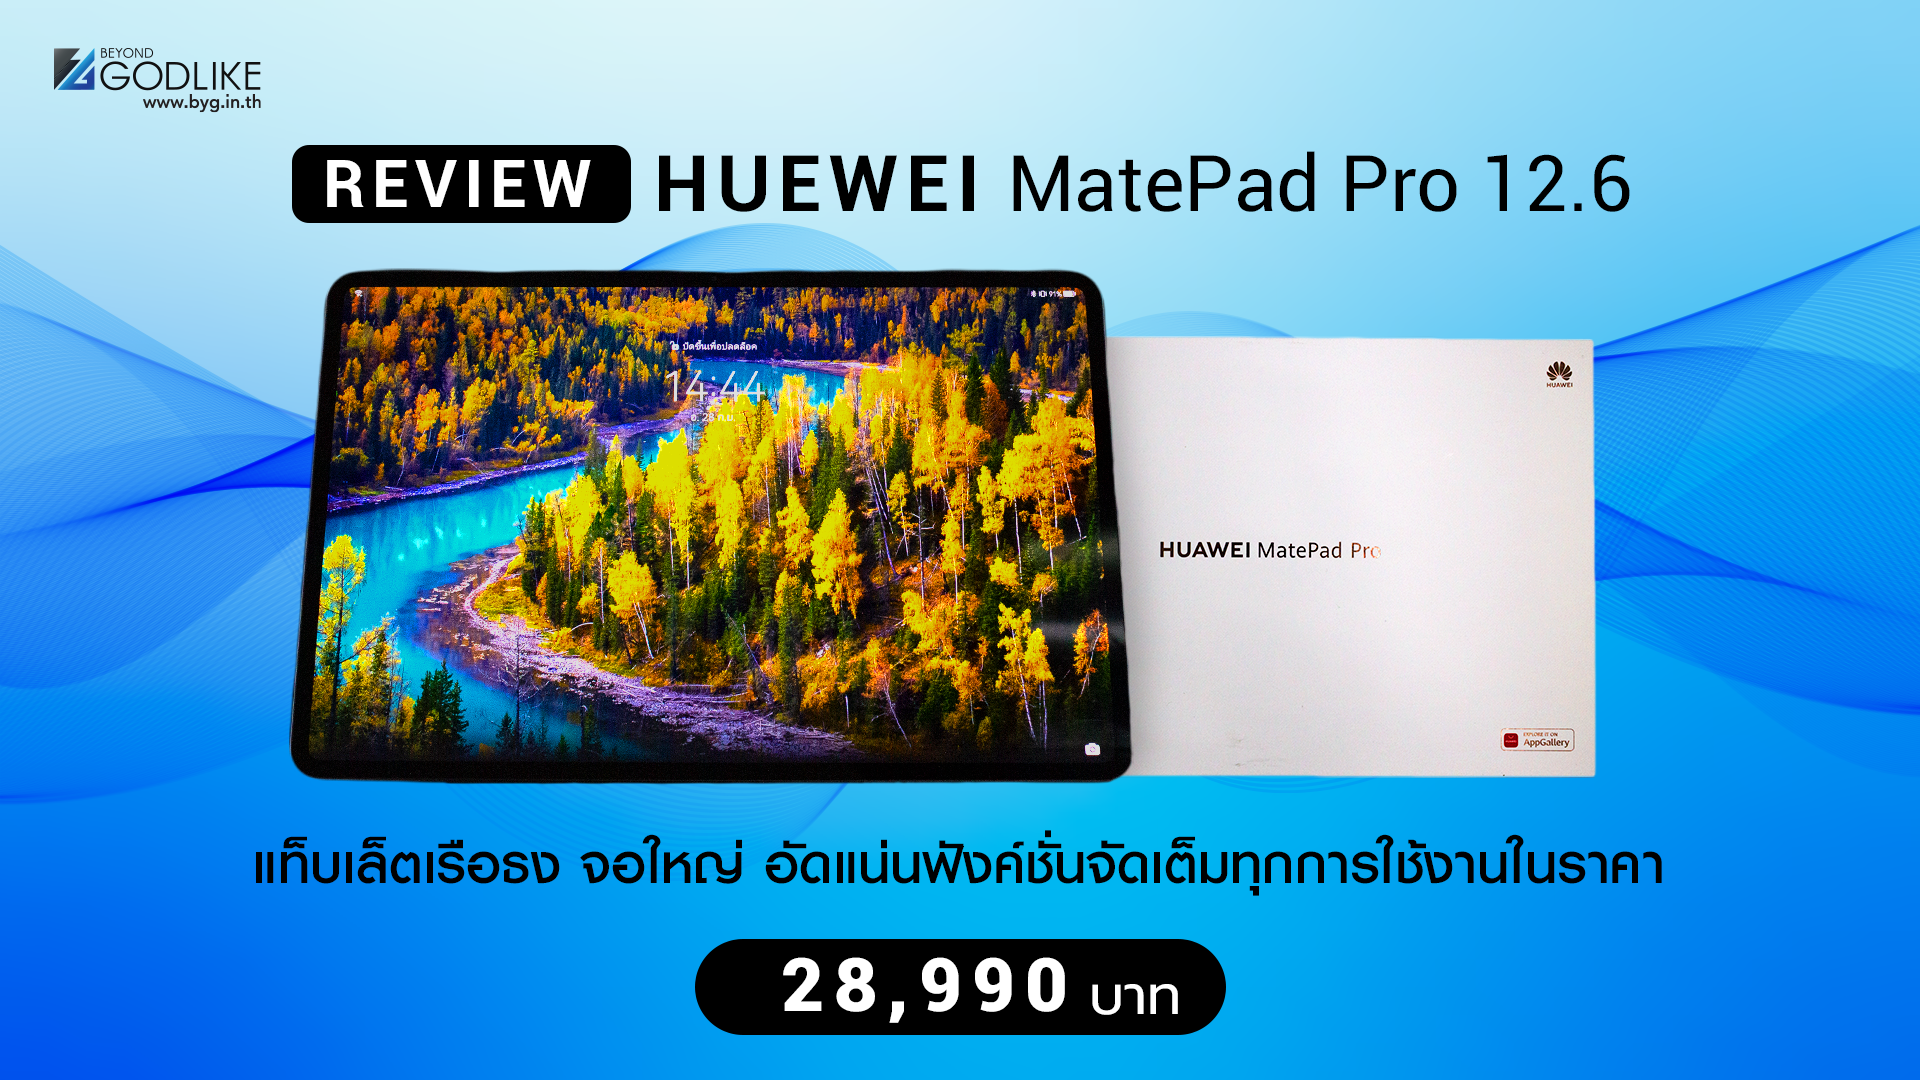 [Review] HUAWEI MatePad Pro 12.6” แท็บเล็ตเรือธง จอใหญ่ อัดแน่นฟังค์ชั่นจัดเต็มทุกการใช้งานในราคา 28,990 บาท 